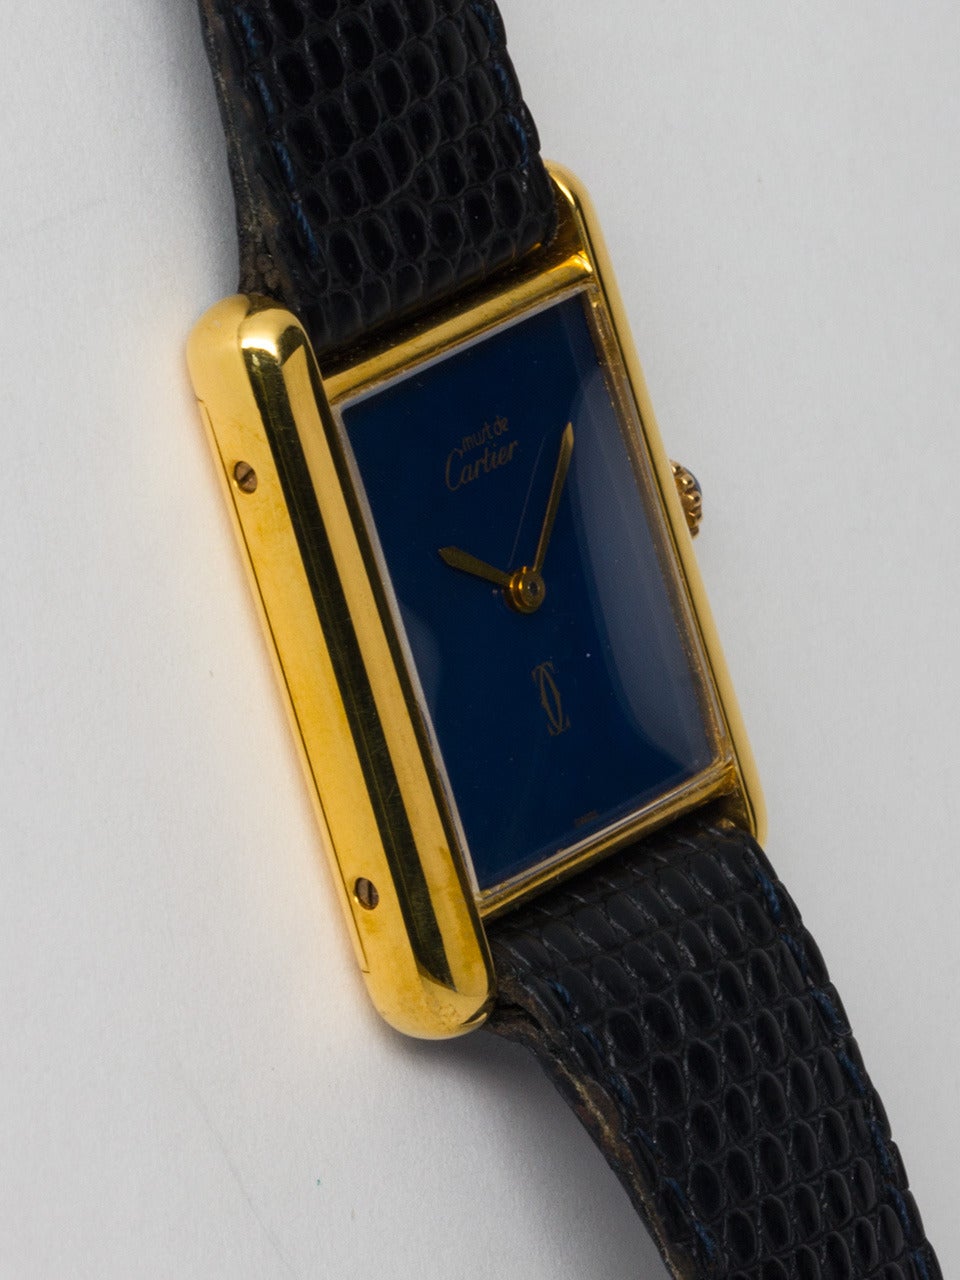 Cartier Man's Vermeil Must de Cartier Tank Louis wristwatch, circa 1980s. Vermeil, 20 microns gold over silver, 23.5 X 31mm case secured by four screws. Lovely blue painted dial signed Must de Cartier, with gilt hands. Powered by a 17-jewel